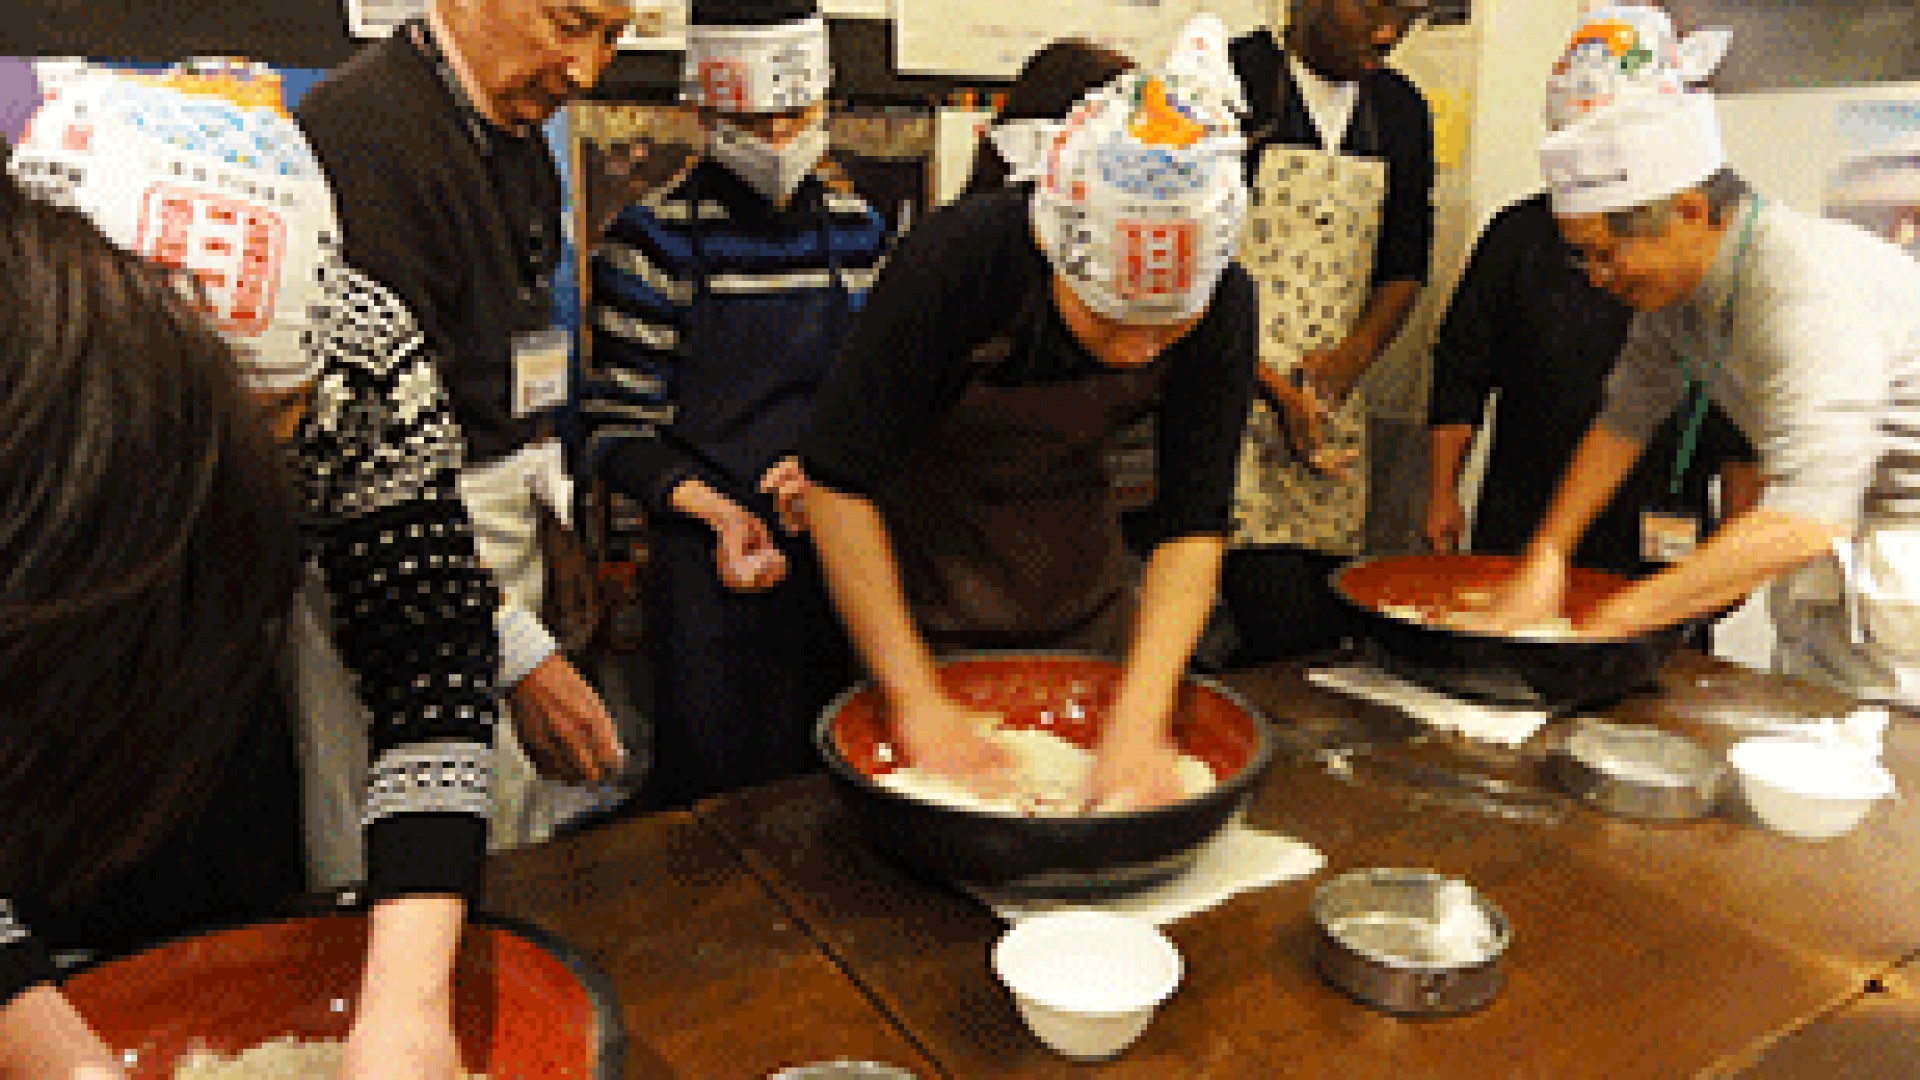 Matsumotokan (Lớp học nấu mỳ Soba)